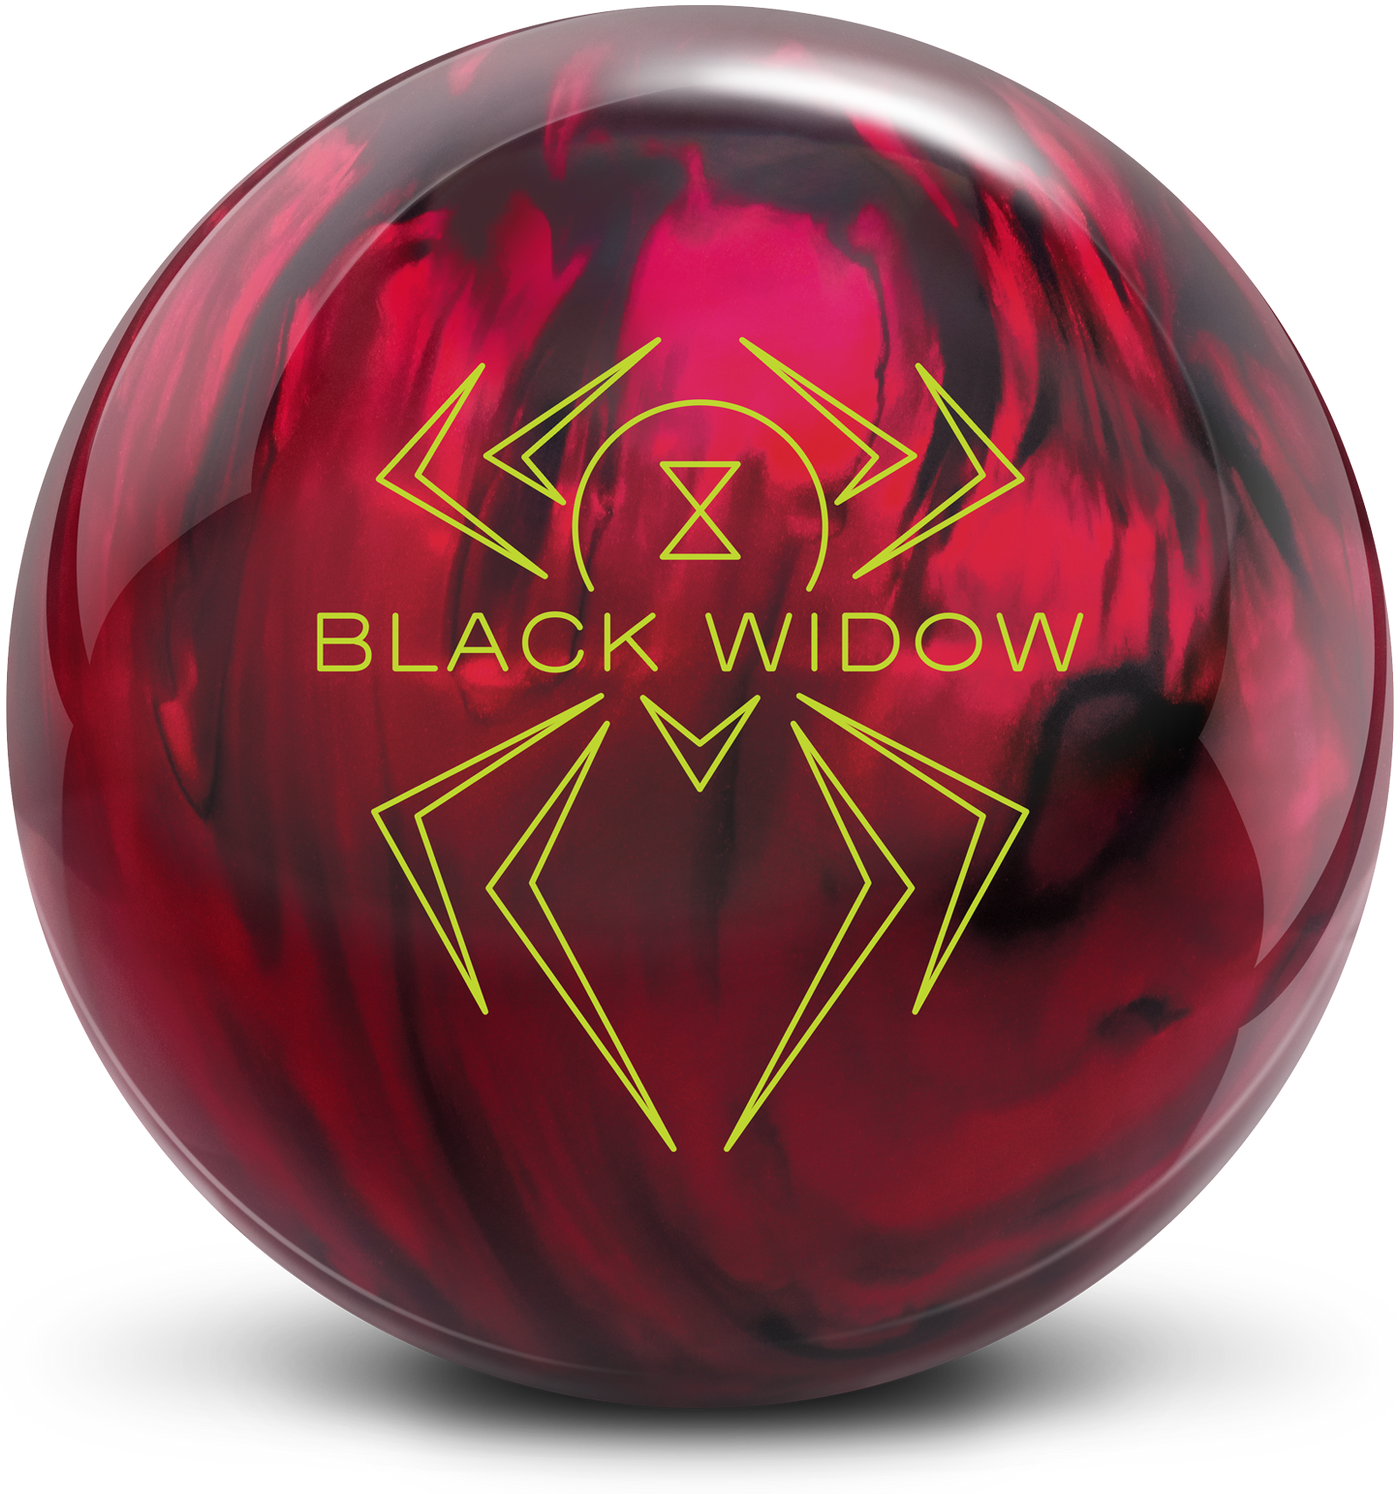 Black Widow 2.0 Hybrid bowling ball